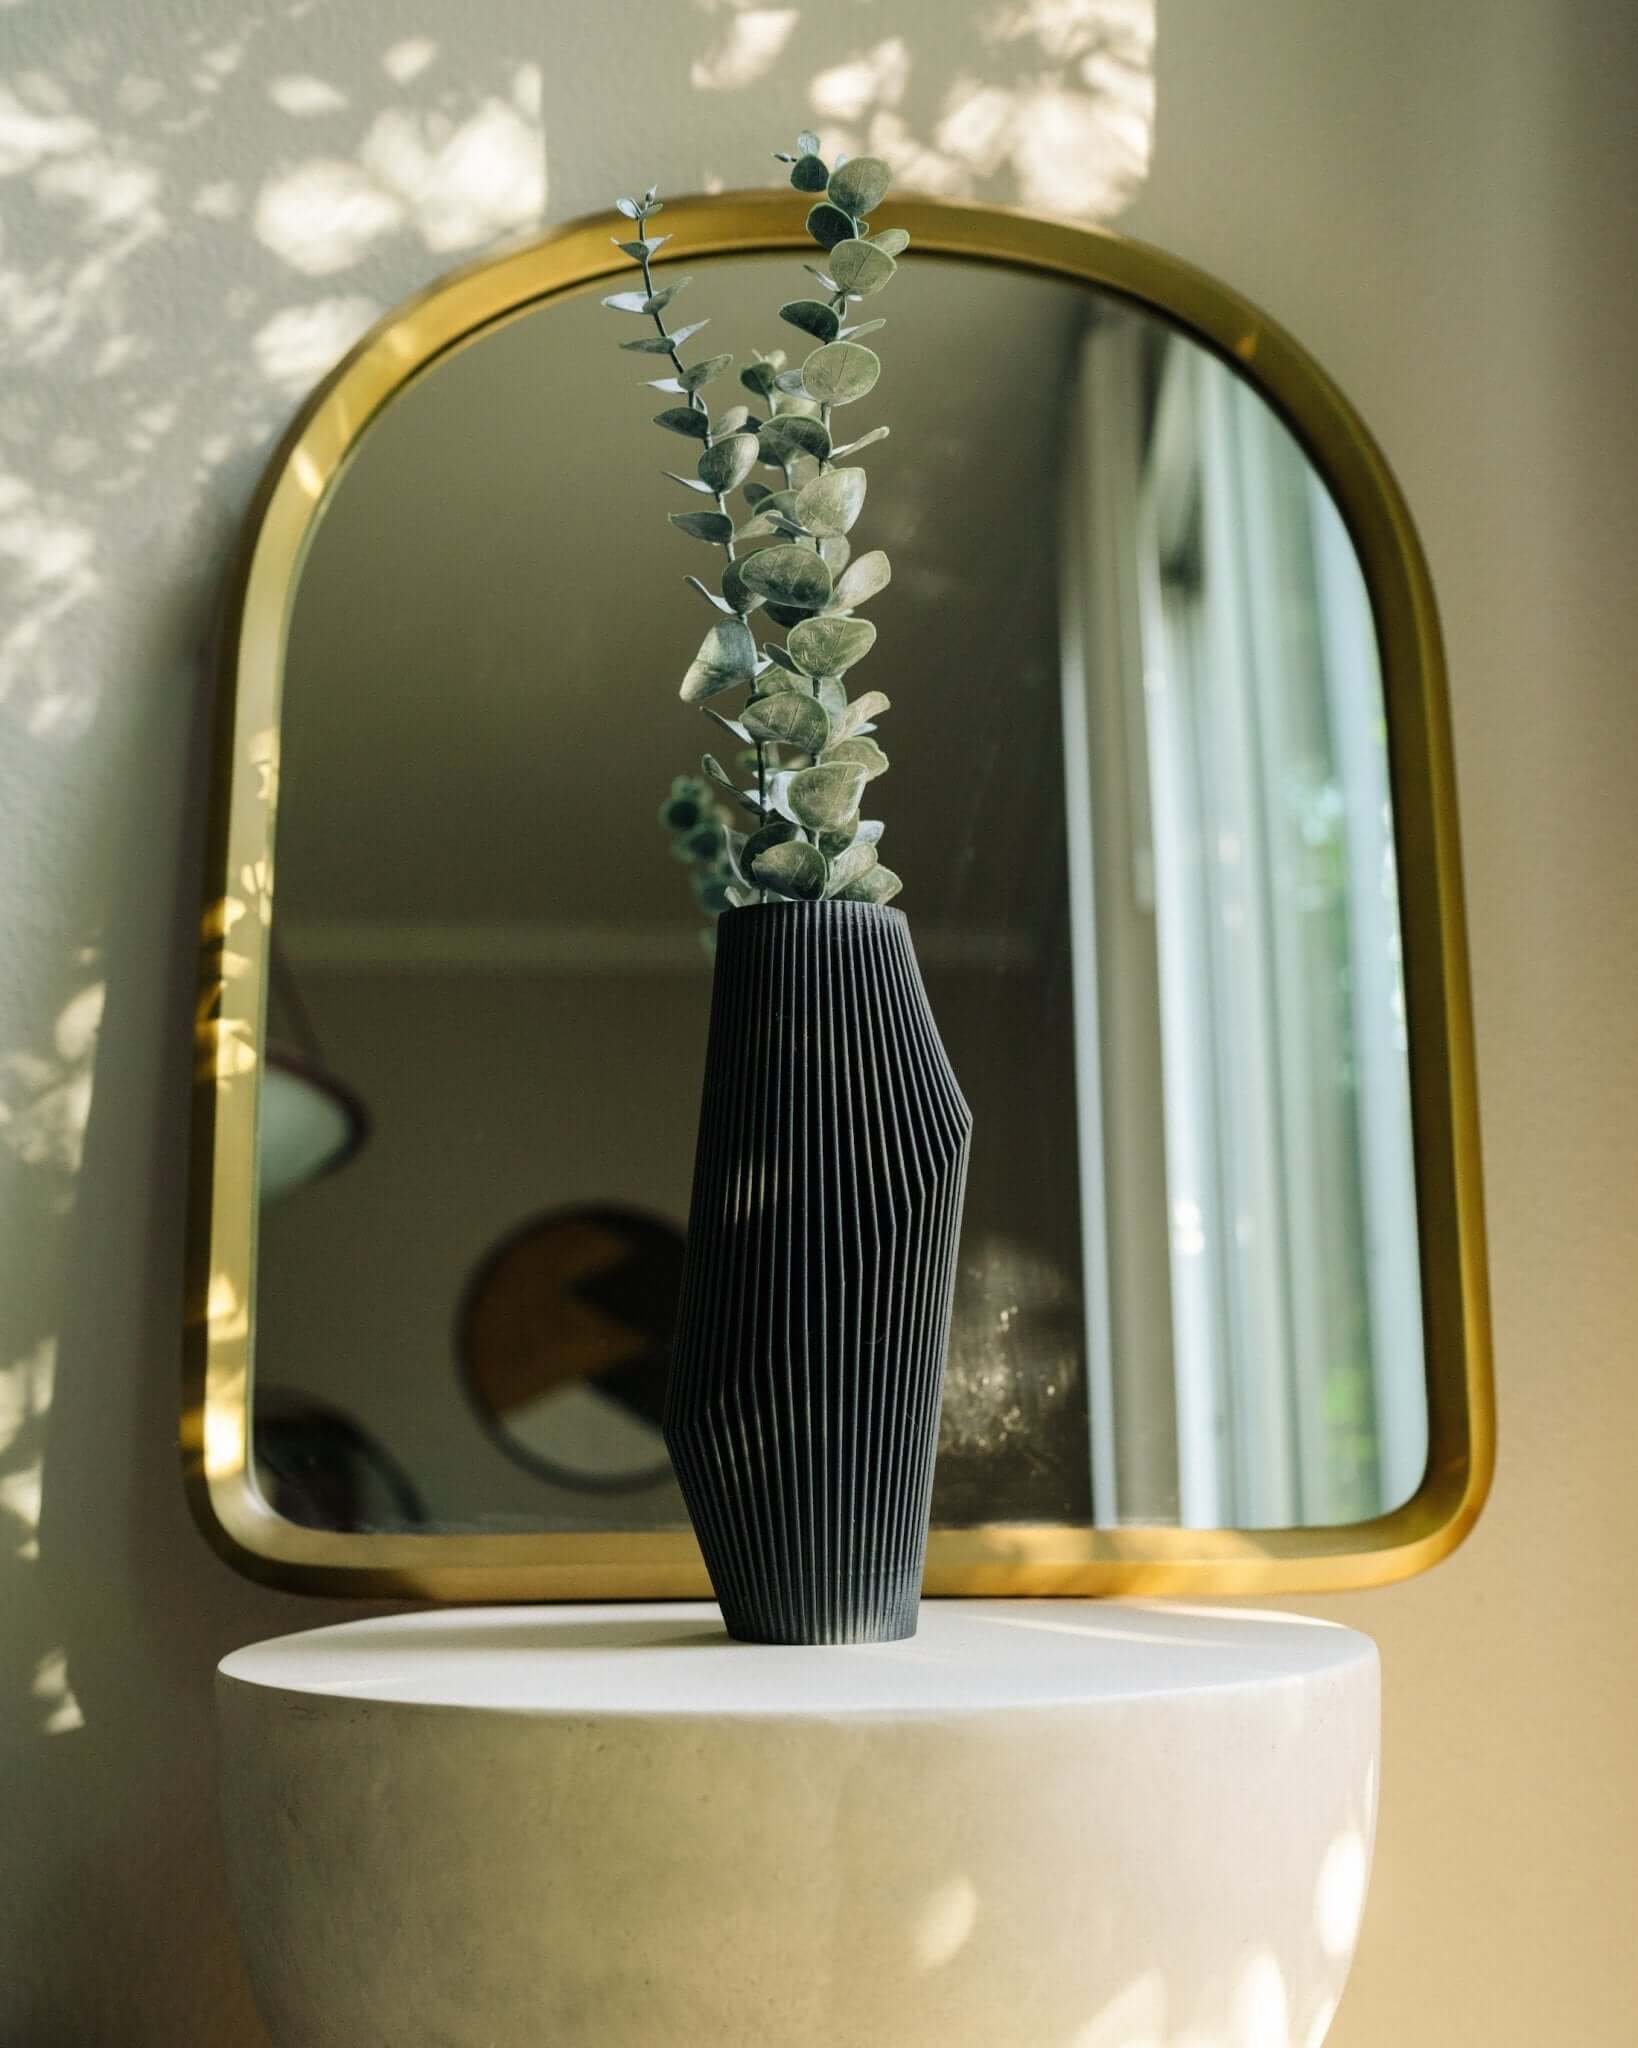 Unique vase with eucalyptus near decorative mirror.